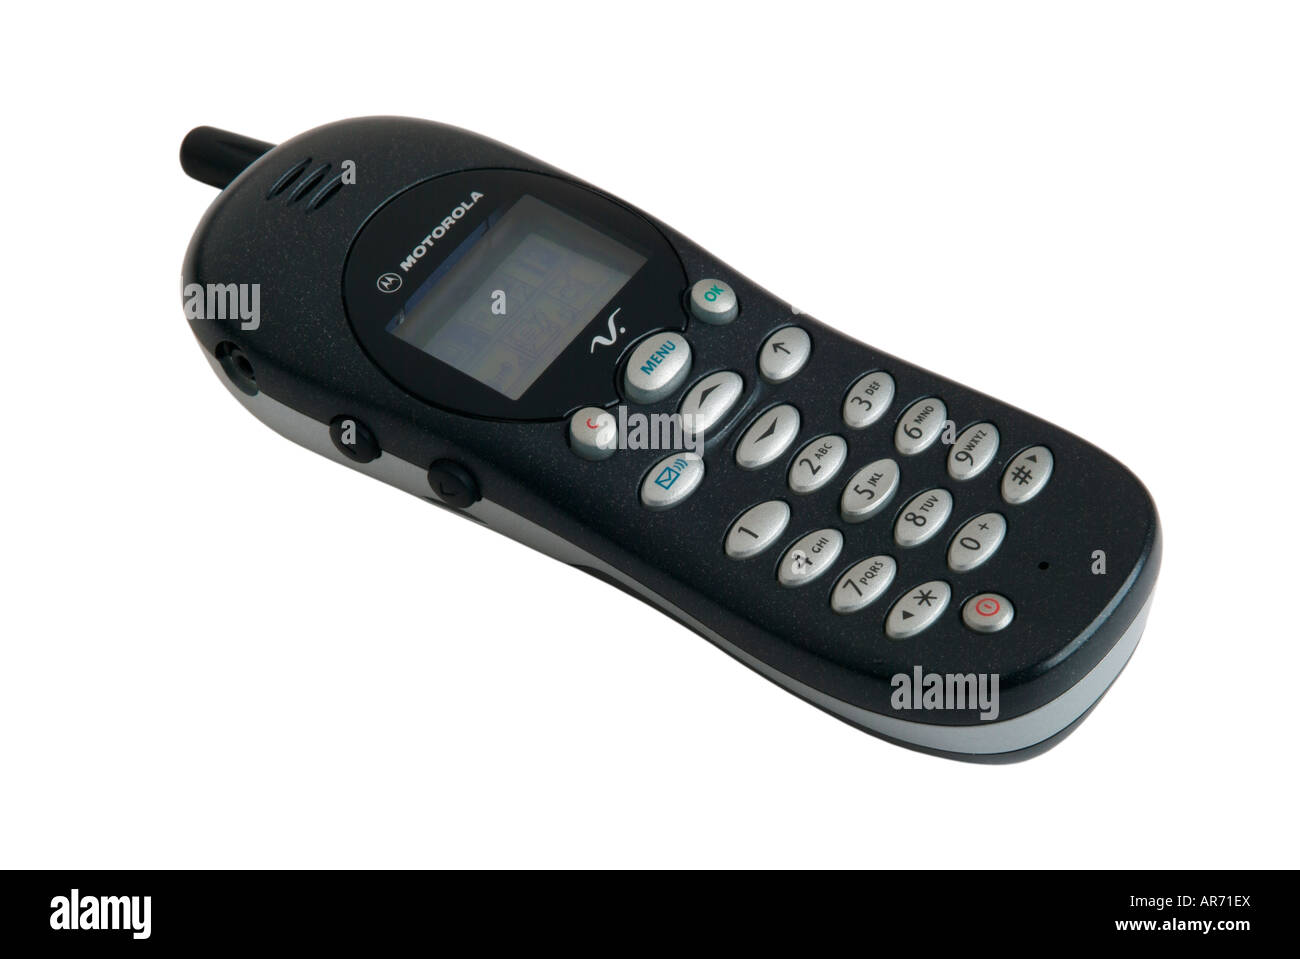 Motorola V2288 mobile phone Stock Photo